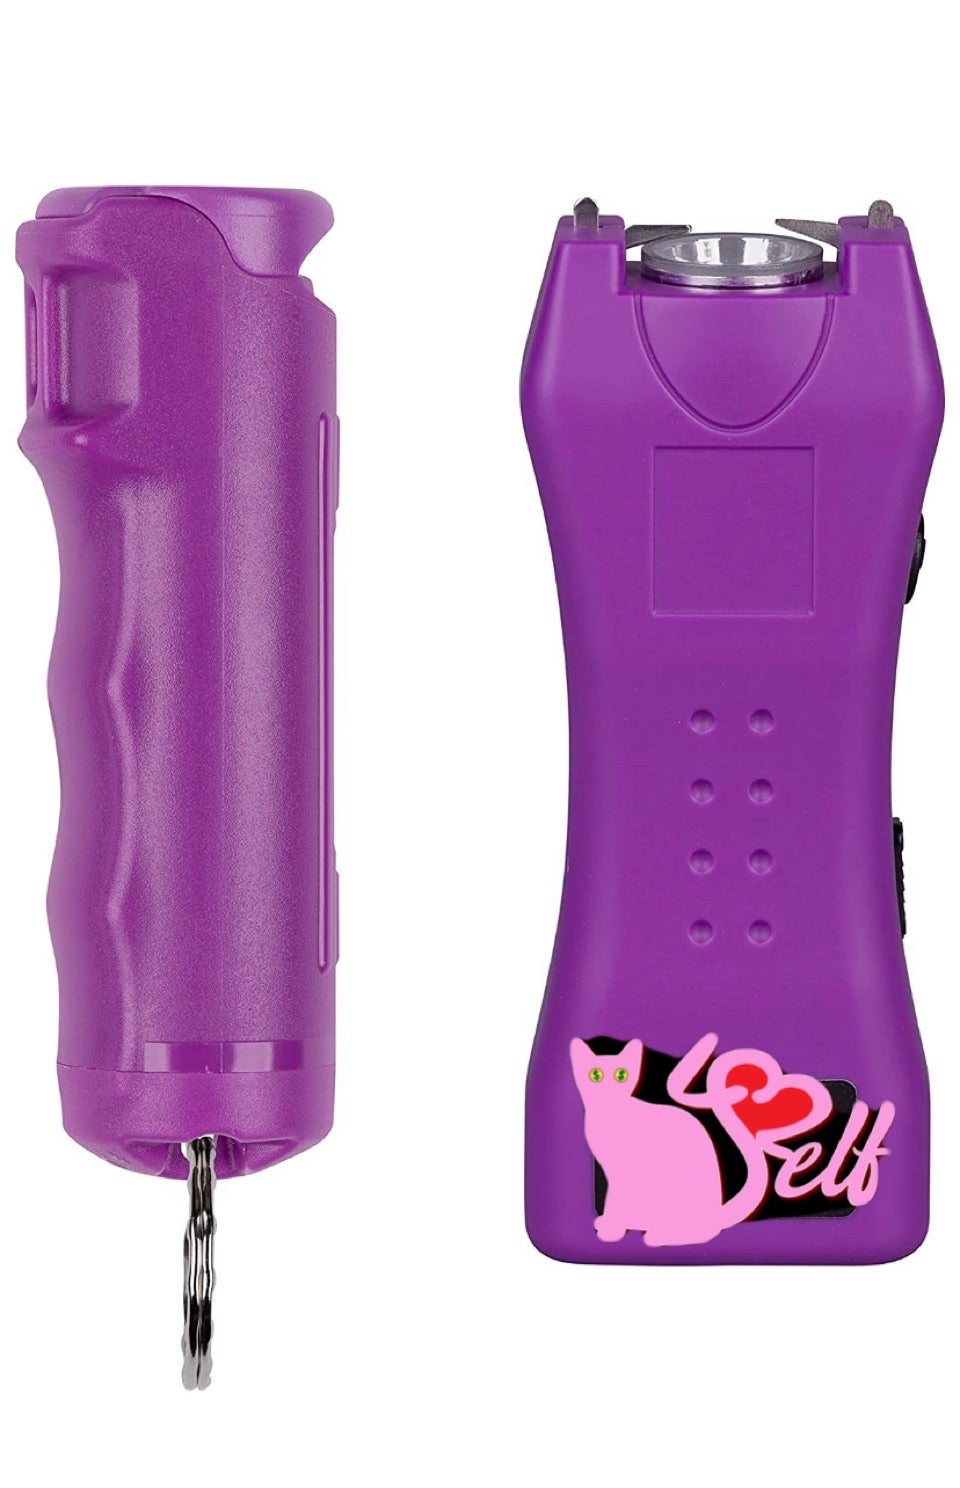 pussy for self pepper spray taser kit available purple